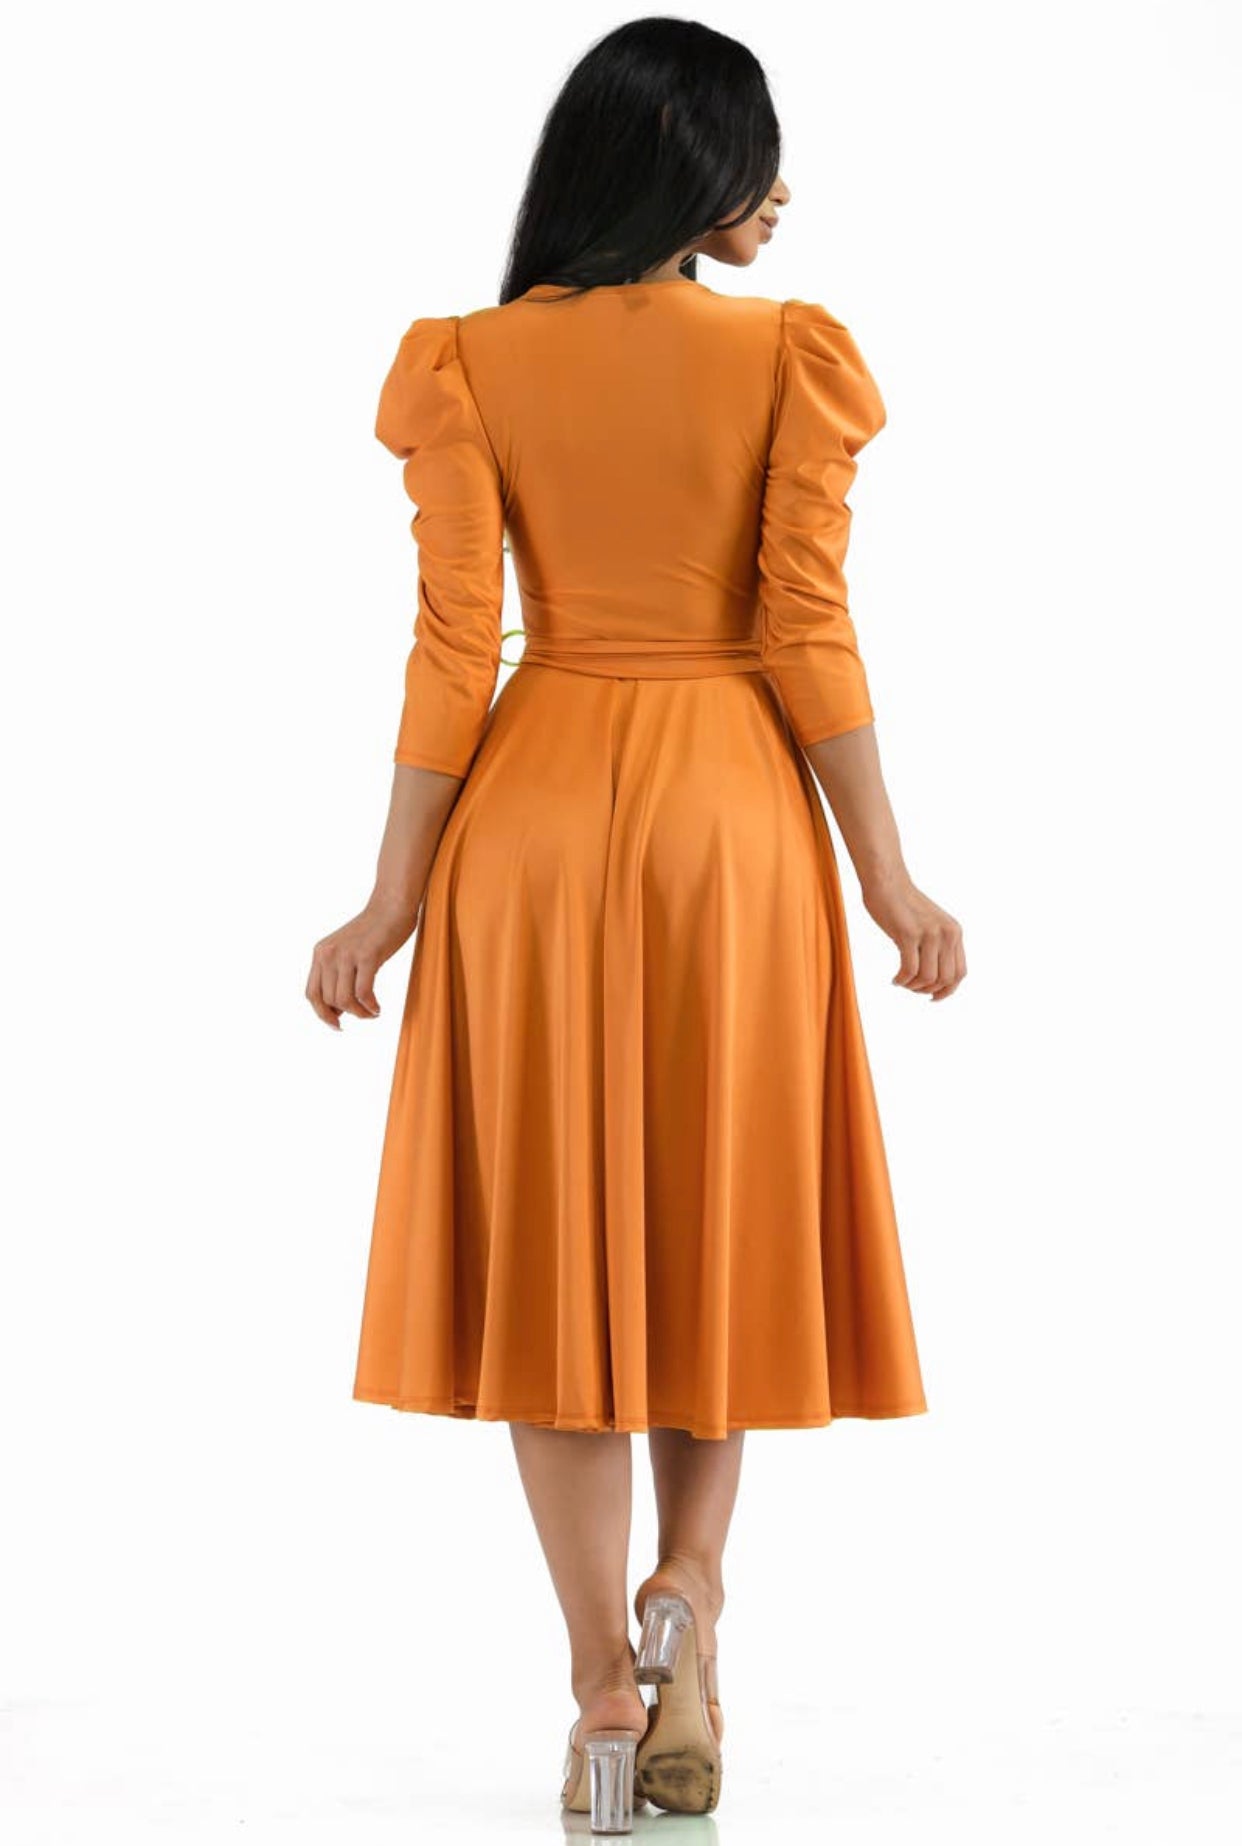 Puff Sleeve Cocktail Dress, Sizes 1X - 3X (Orange)